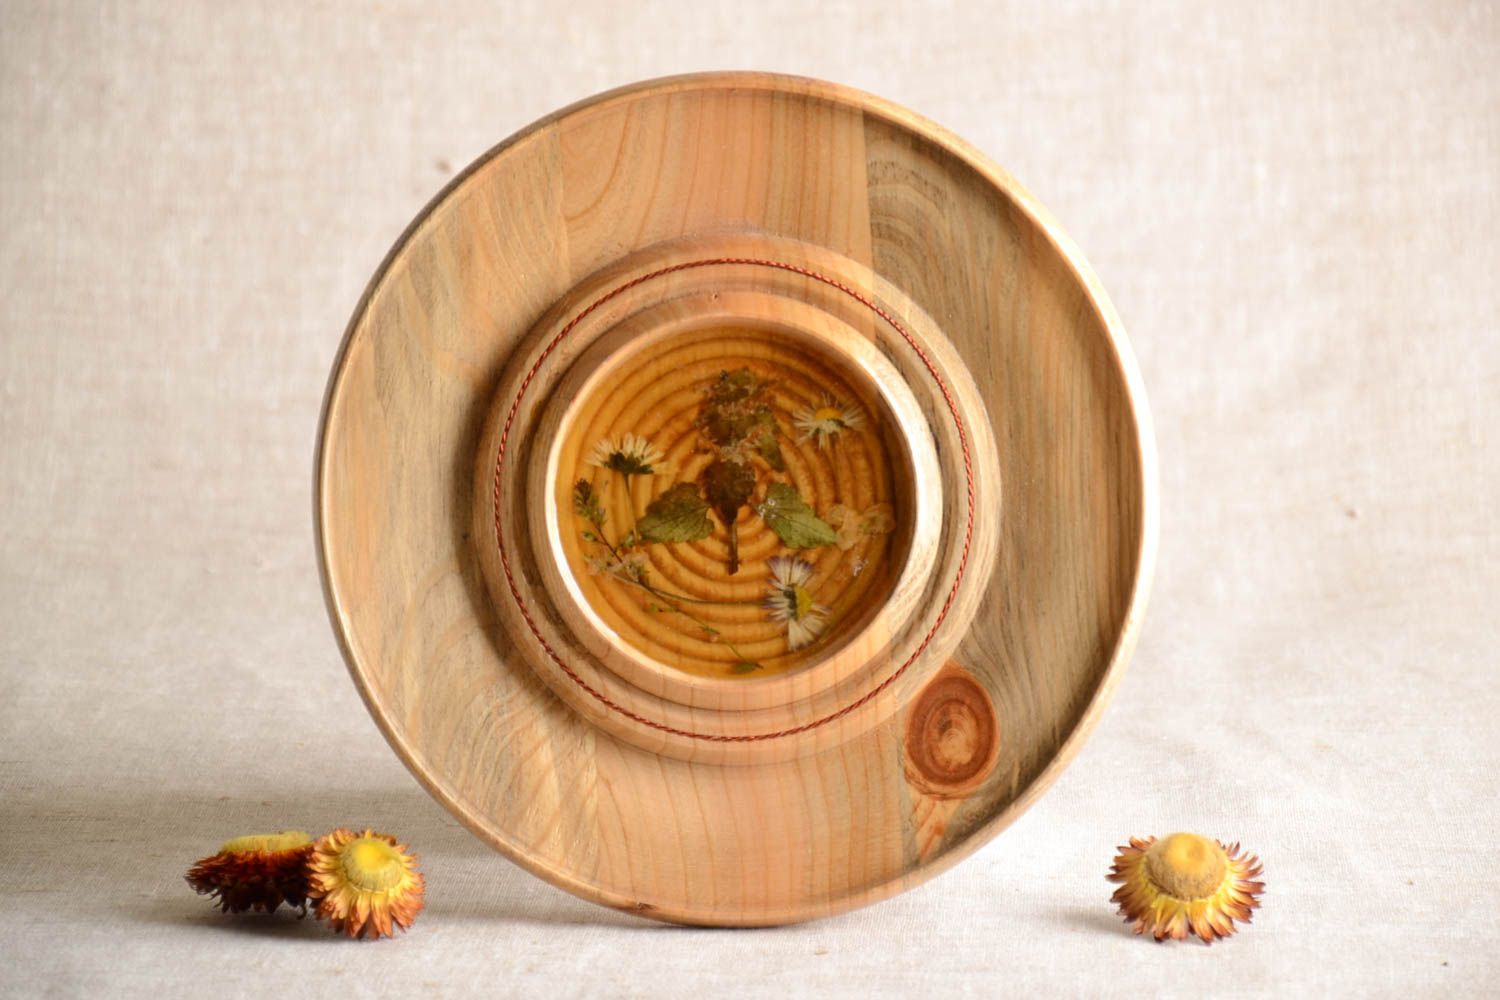 Handmade plate wooden plate designer dishes wall decor kitchen decor gift ideas photo 1